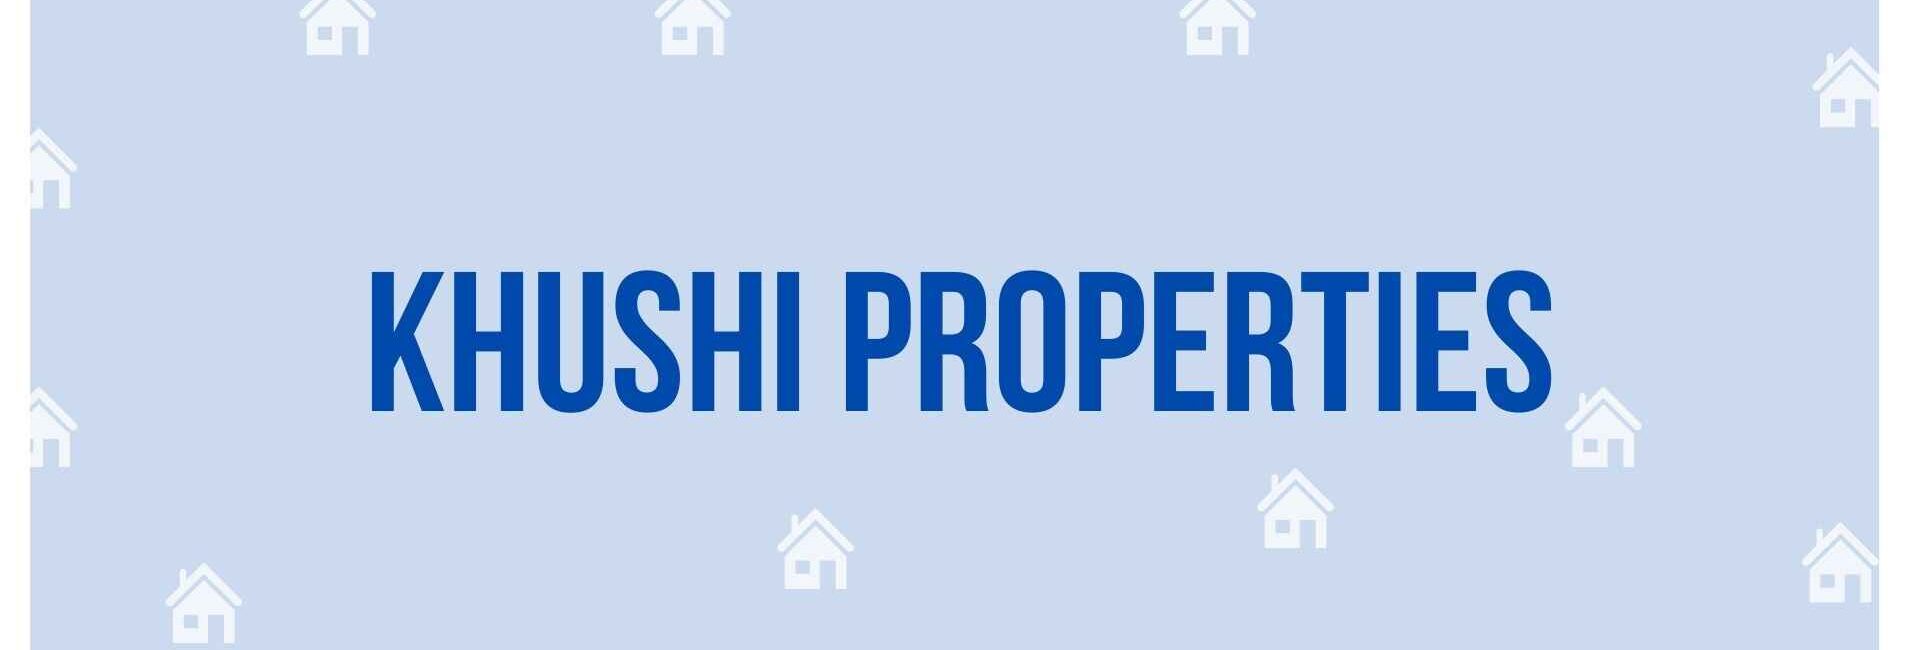 Khushi Properties - Property Dealer in Noida